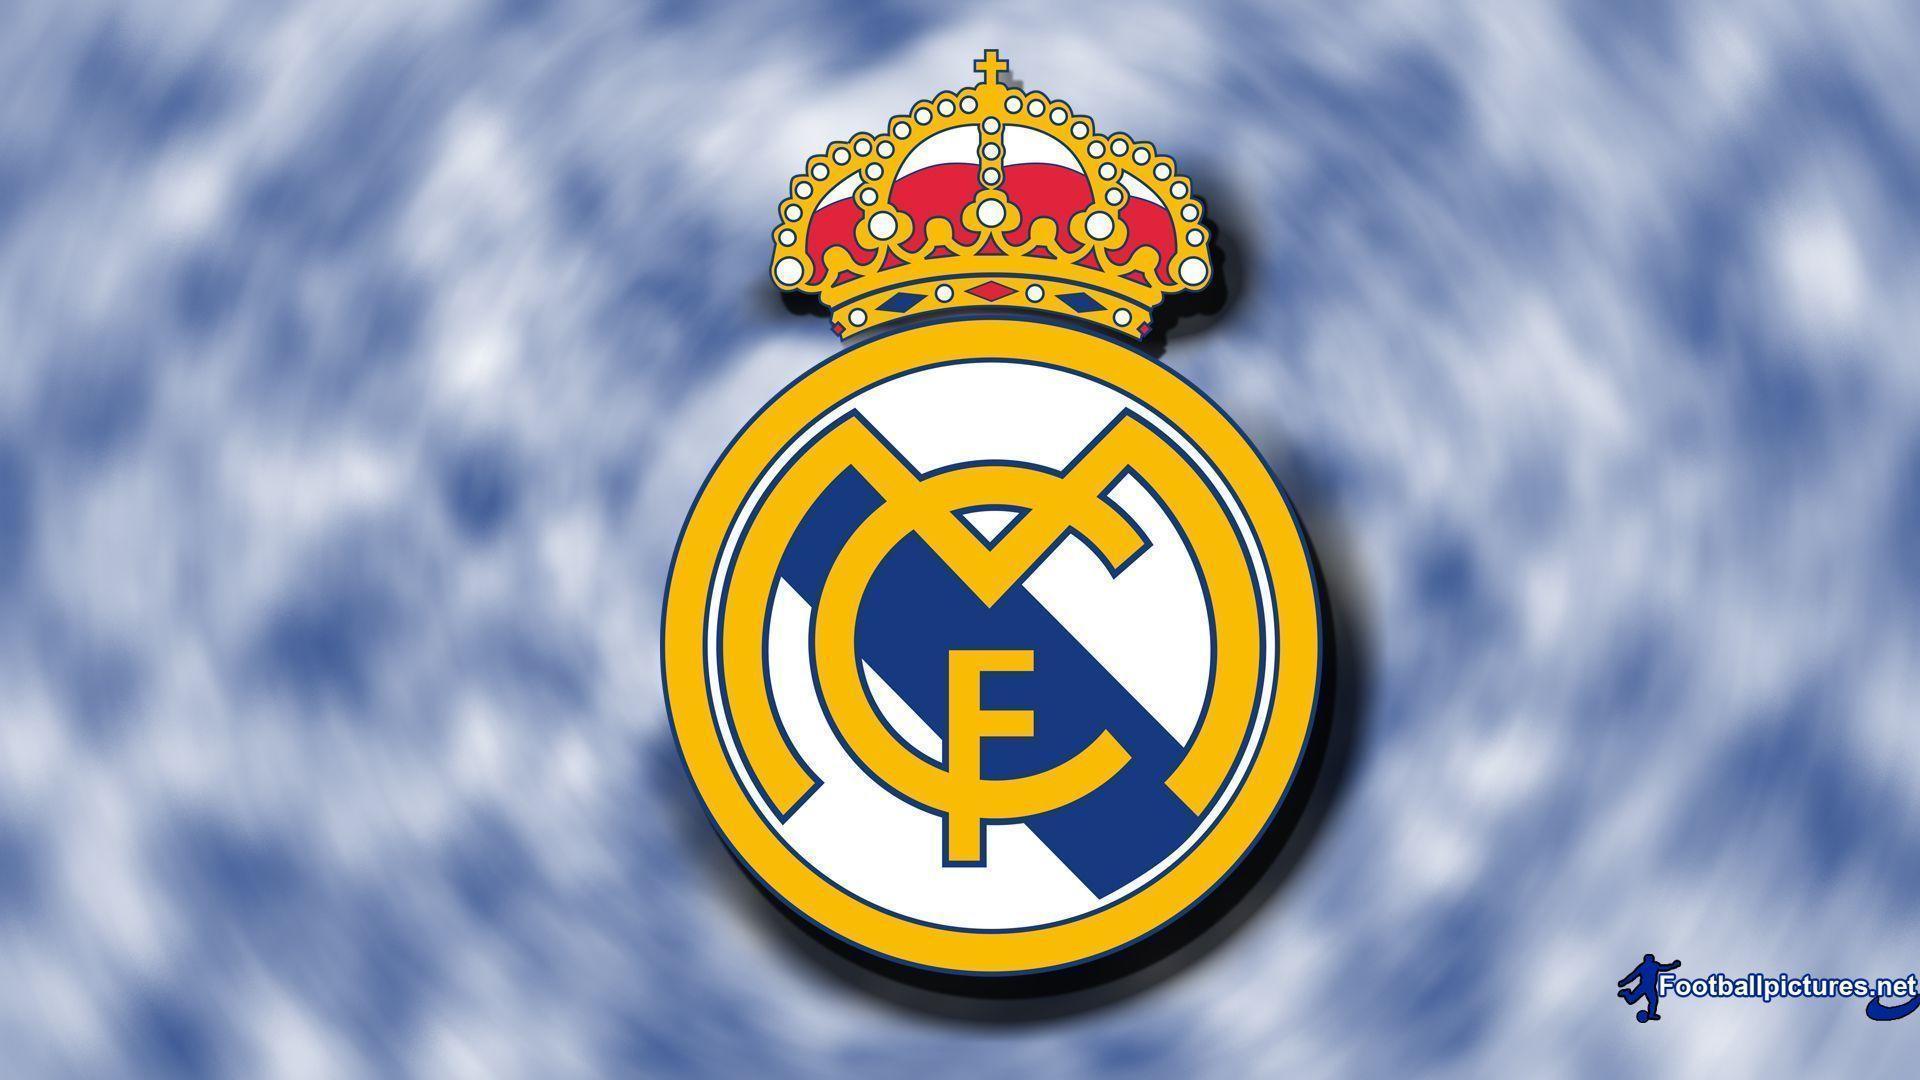 Real Madrid Logo 1080p Wallpapers